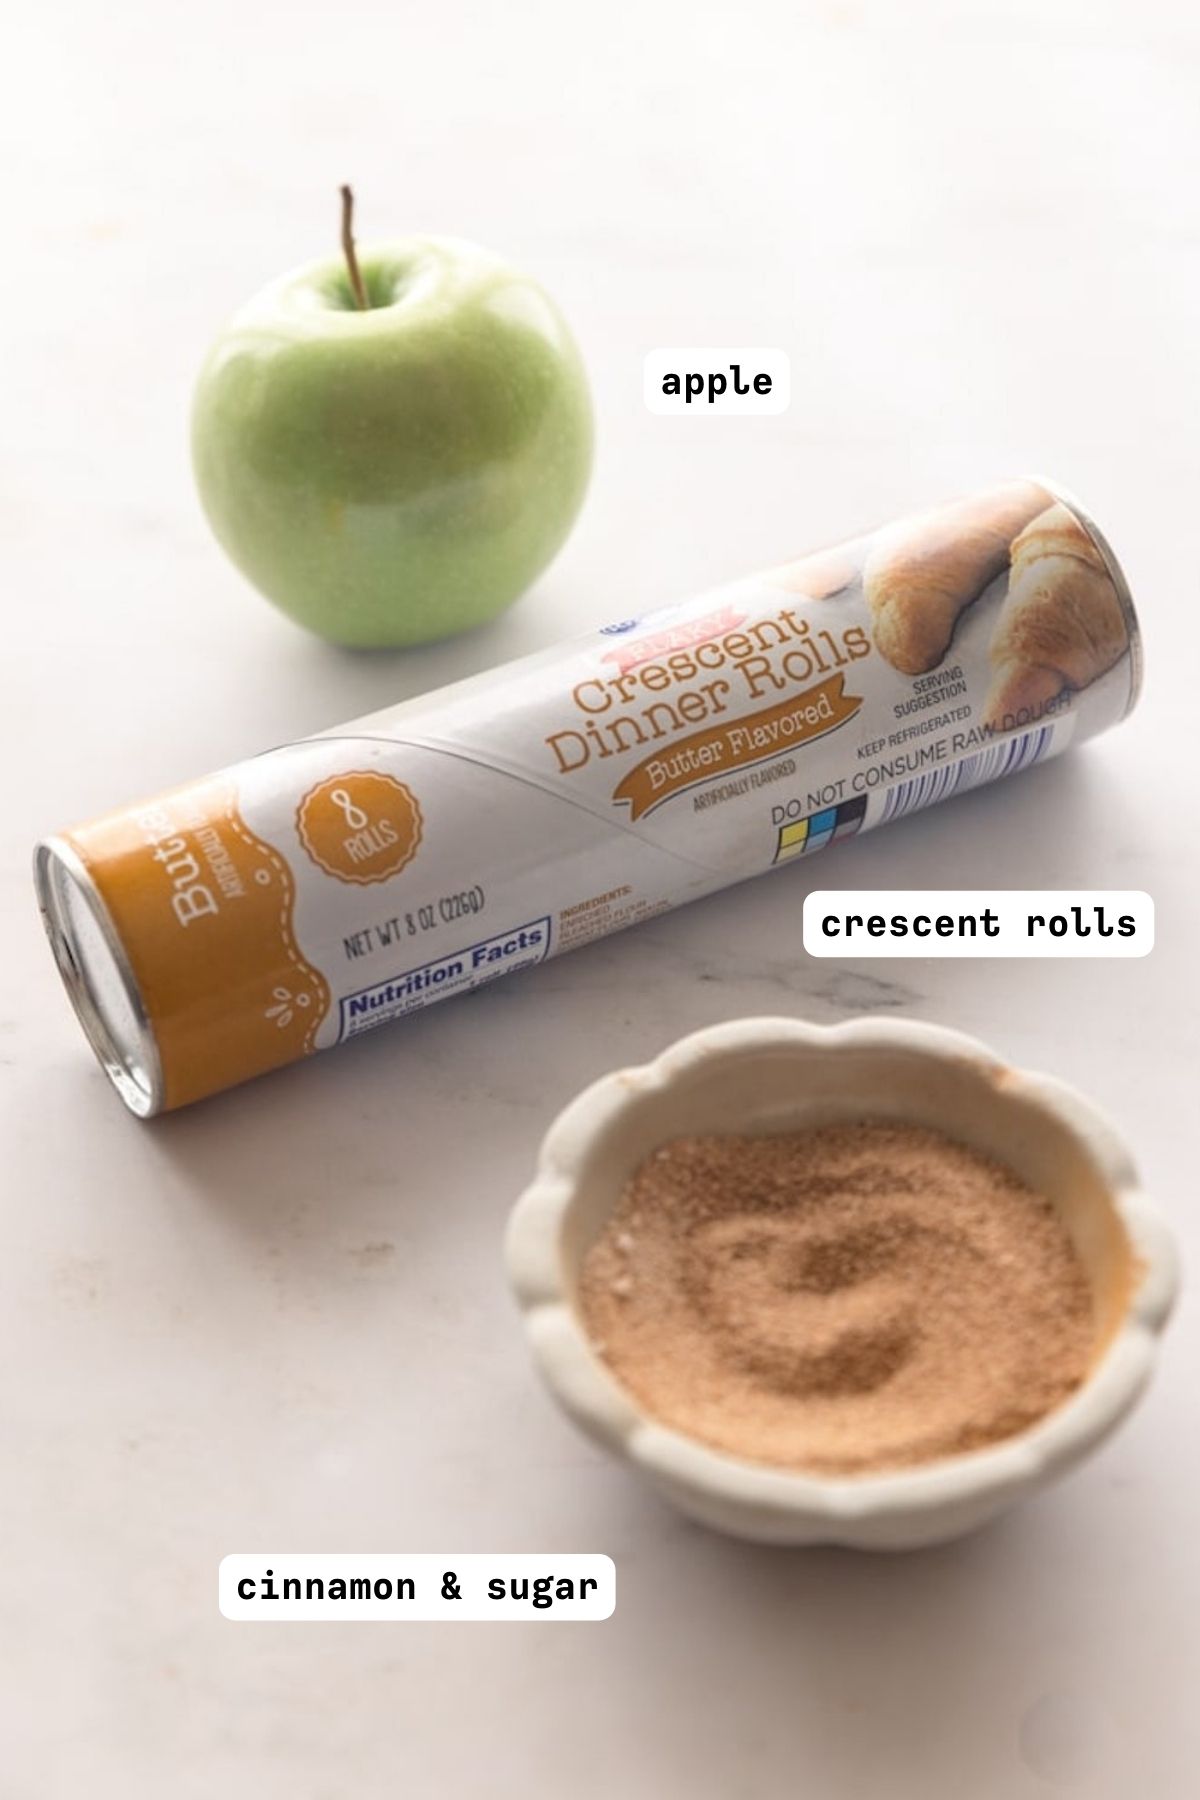 apple crescent roll ingredients 